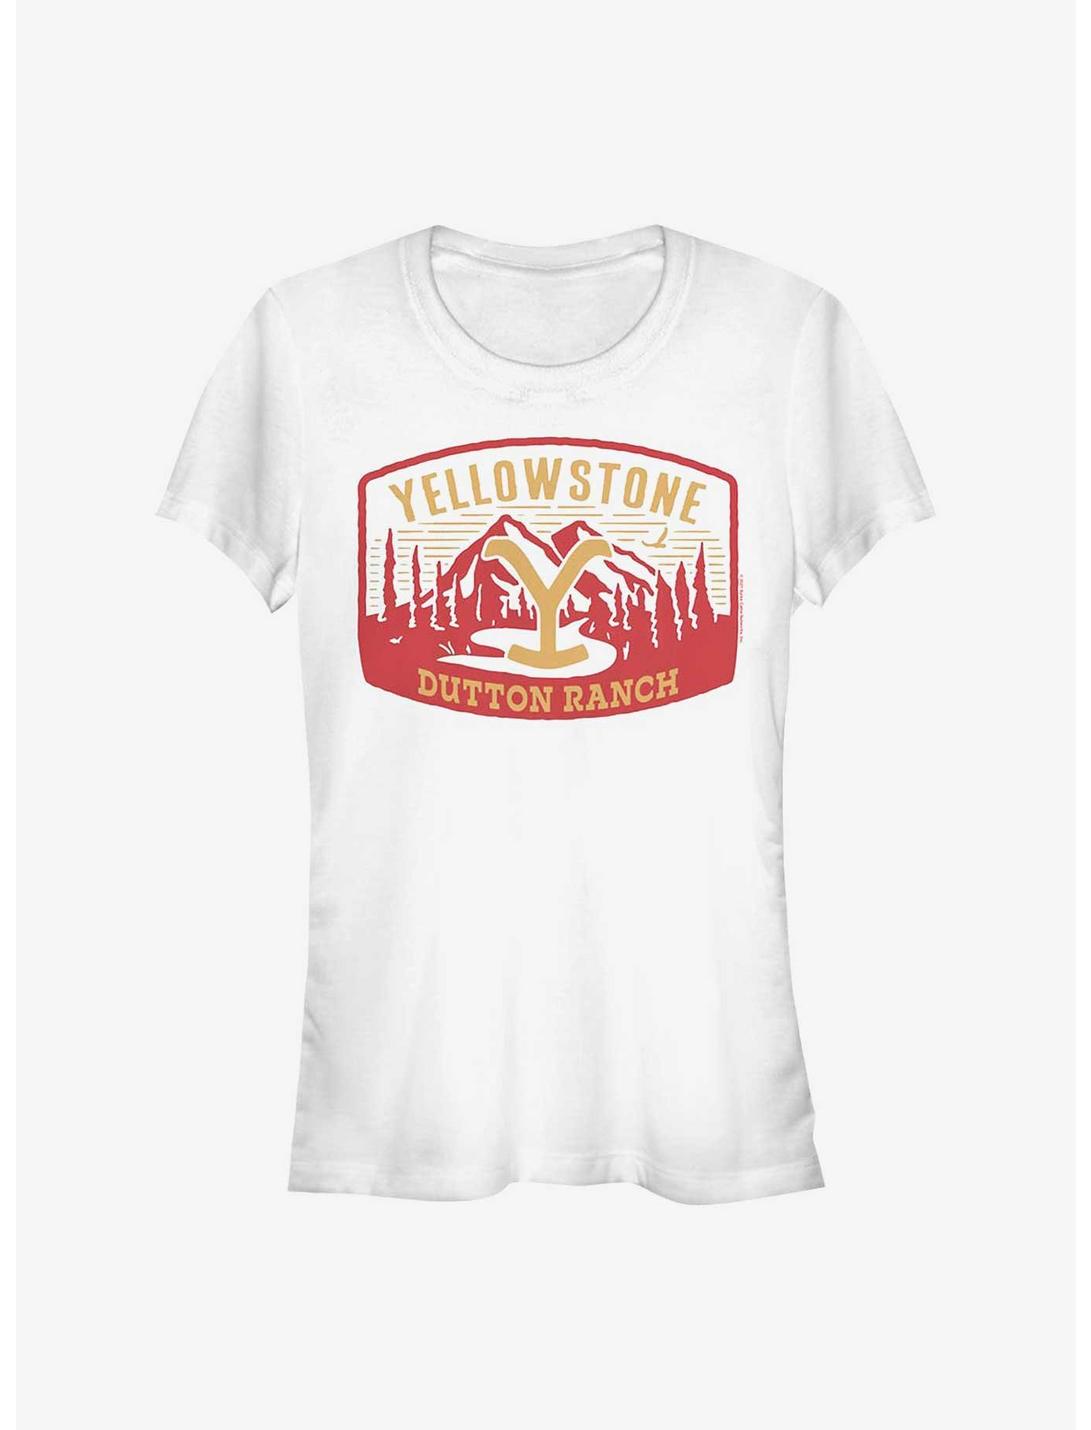 Yellowstone Dutton Ranch Mountains Girls T-Shirt, WHITE, hi-res